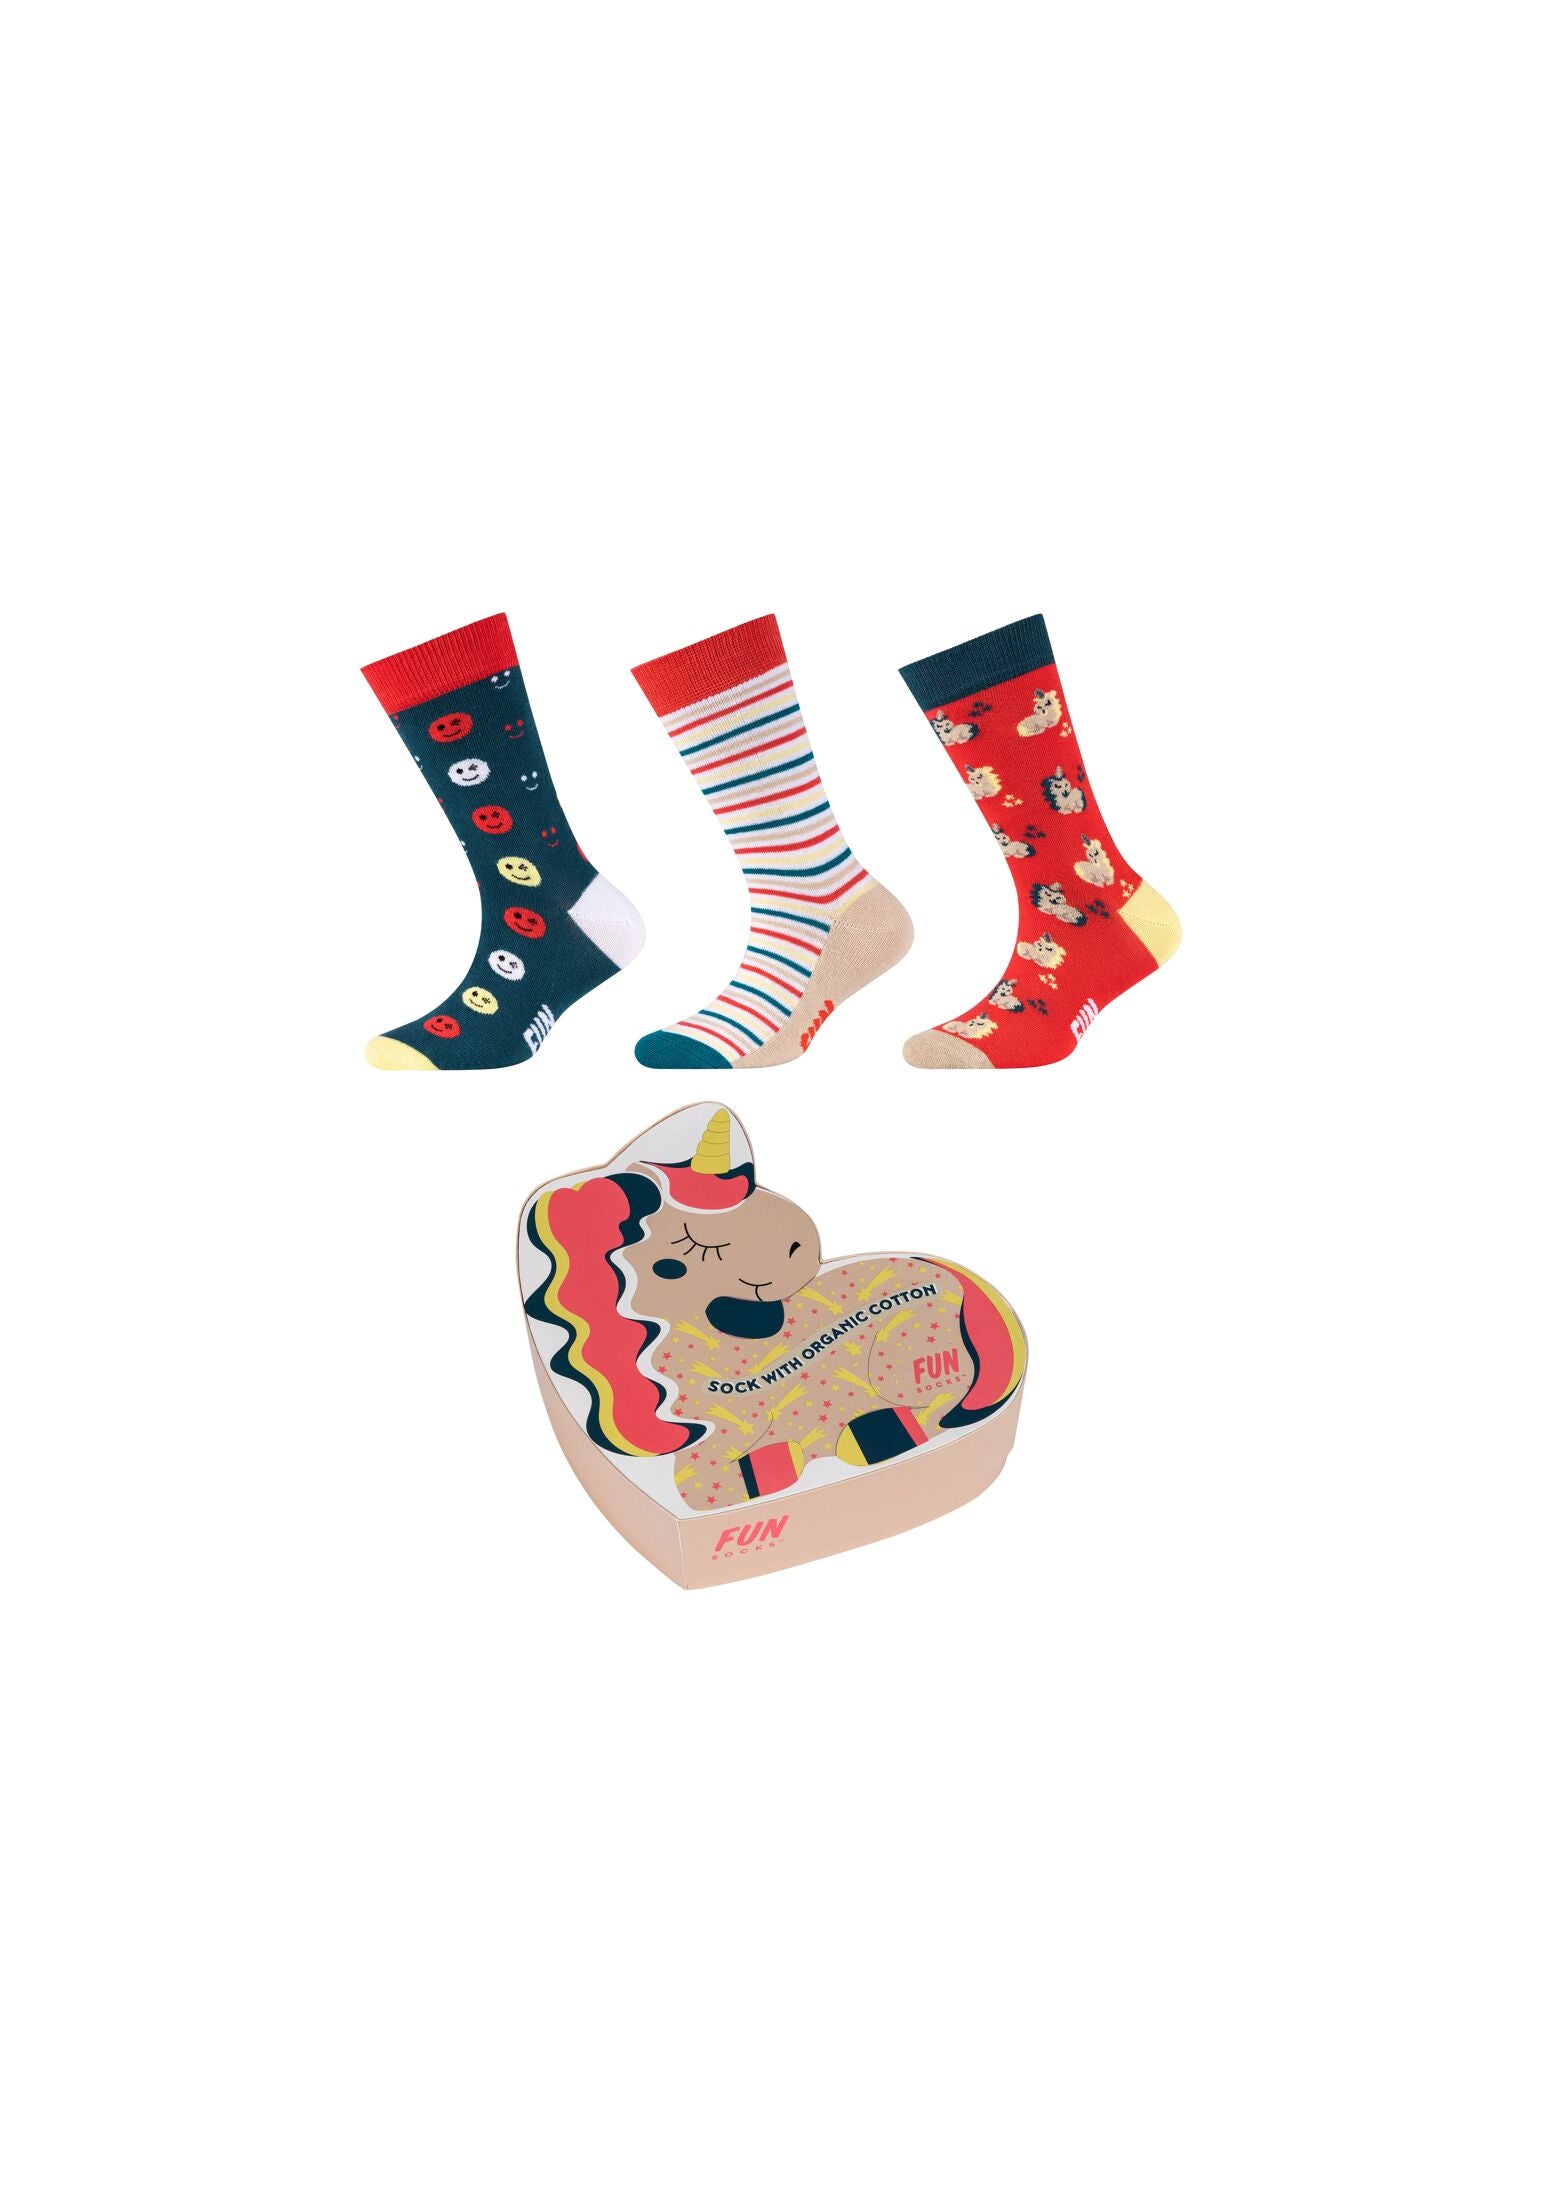 Fun Socks Kinder motifs Socken 3er Pack in Geschenkbox georgia peach kaufen  bei